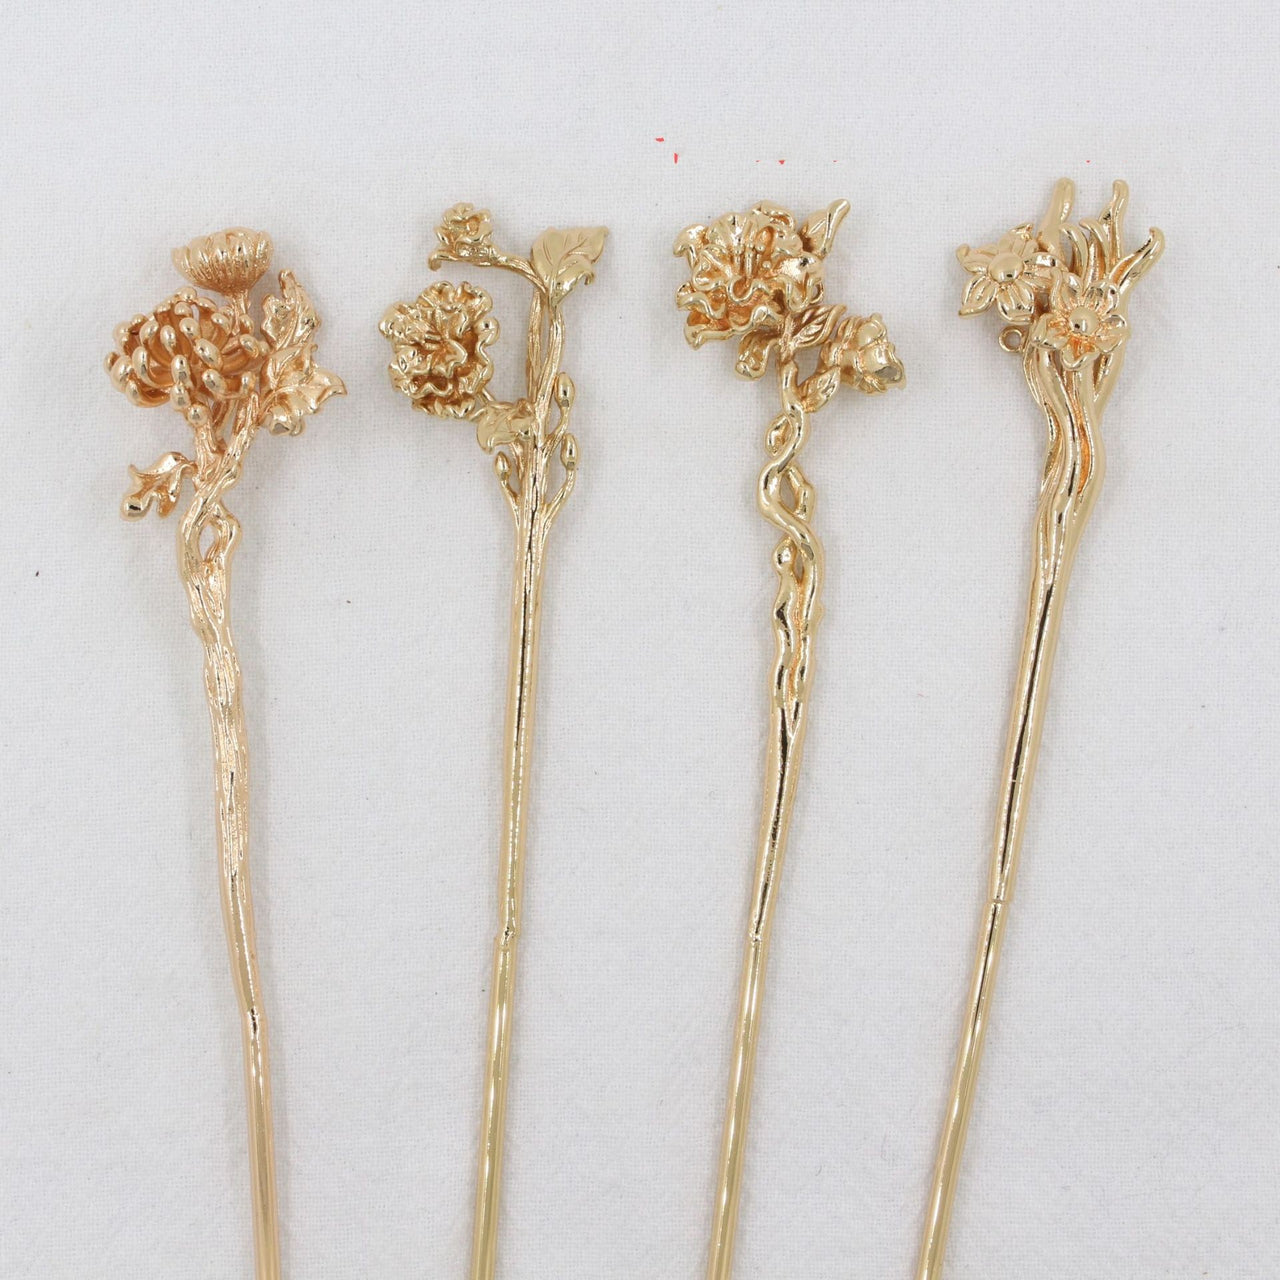 Antique Material Flower Season Hairpin